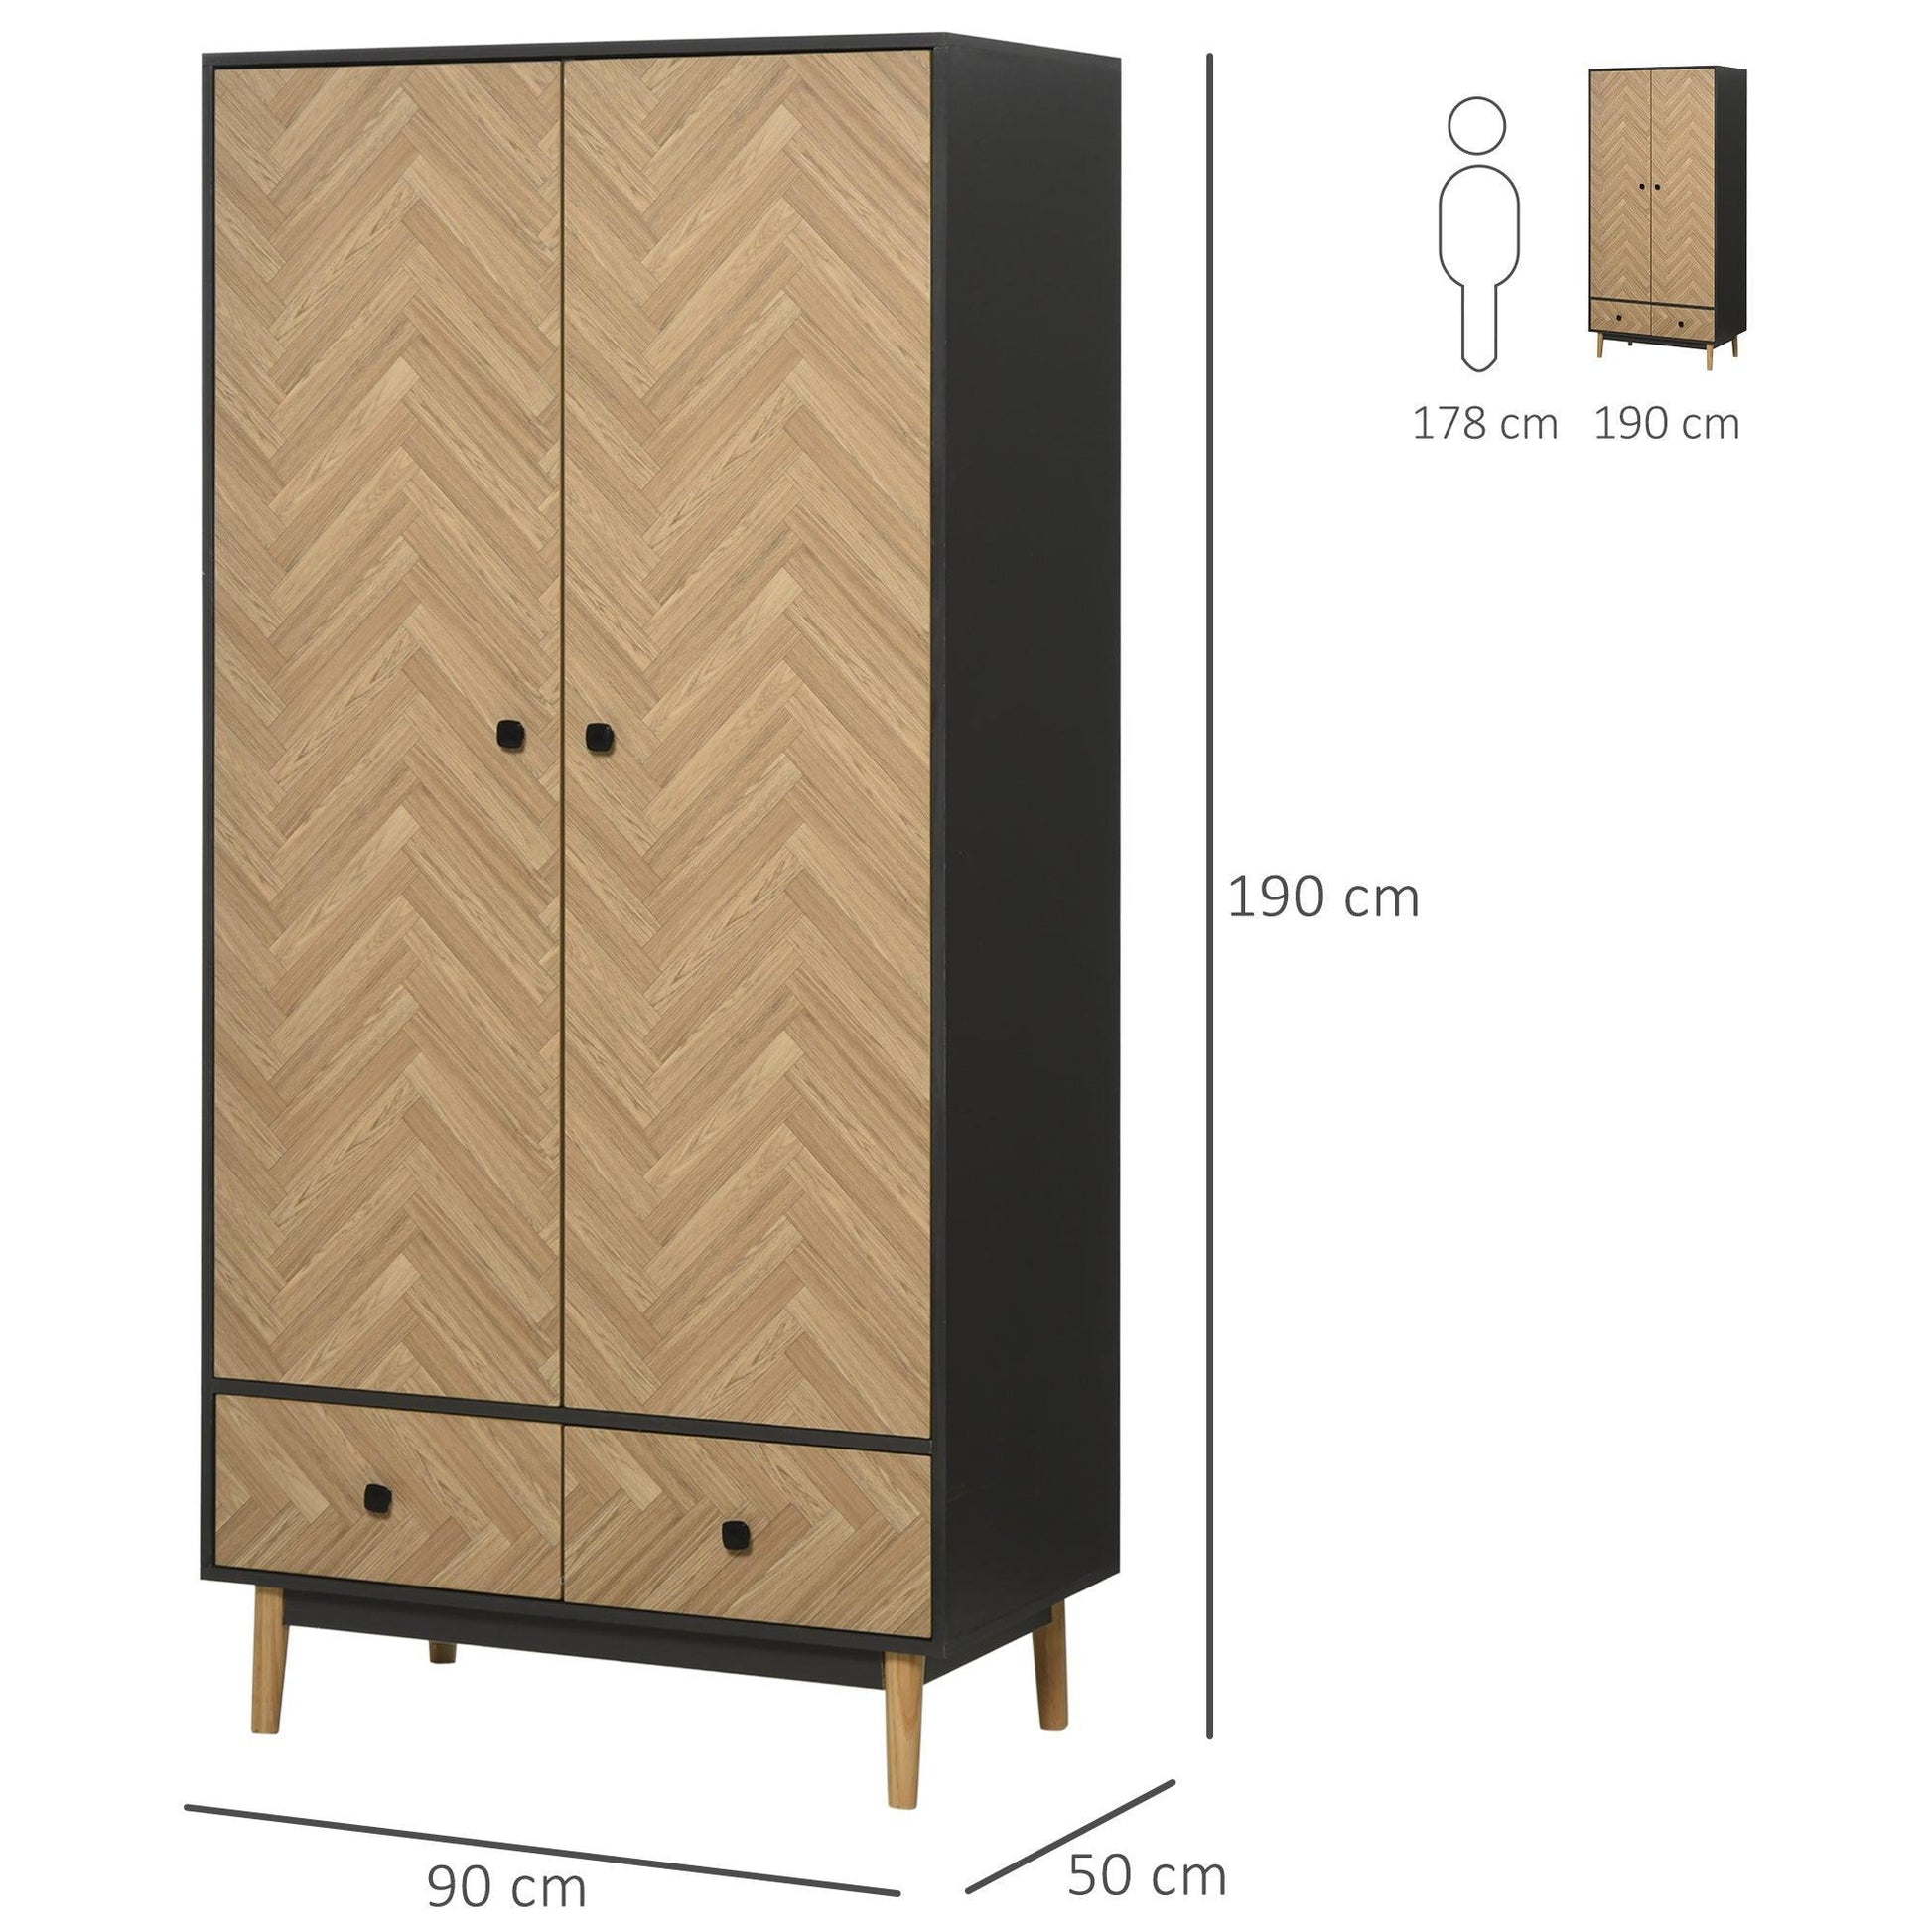 HOMCOM Wardrobe Cabinet: Wood Grain, Shelf, Rod, 2 Drawers - ALL4U RETAILER LTD